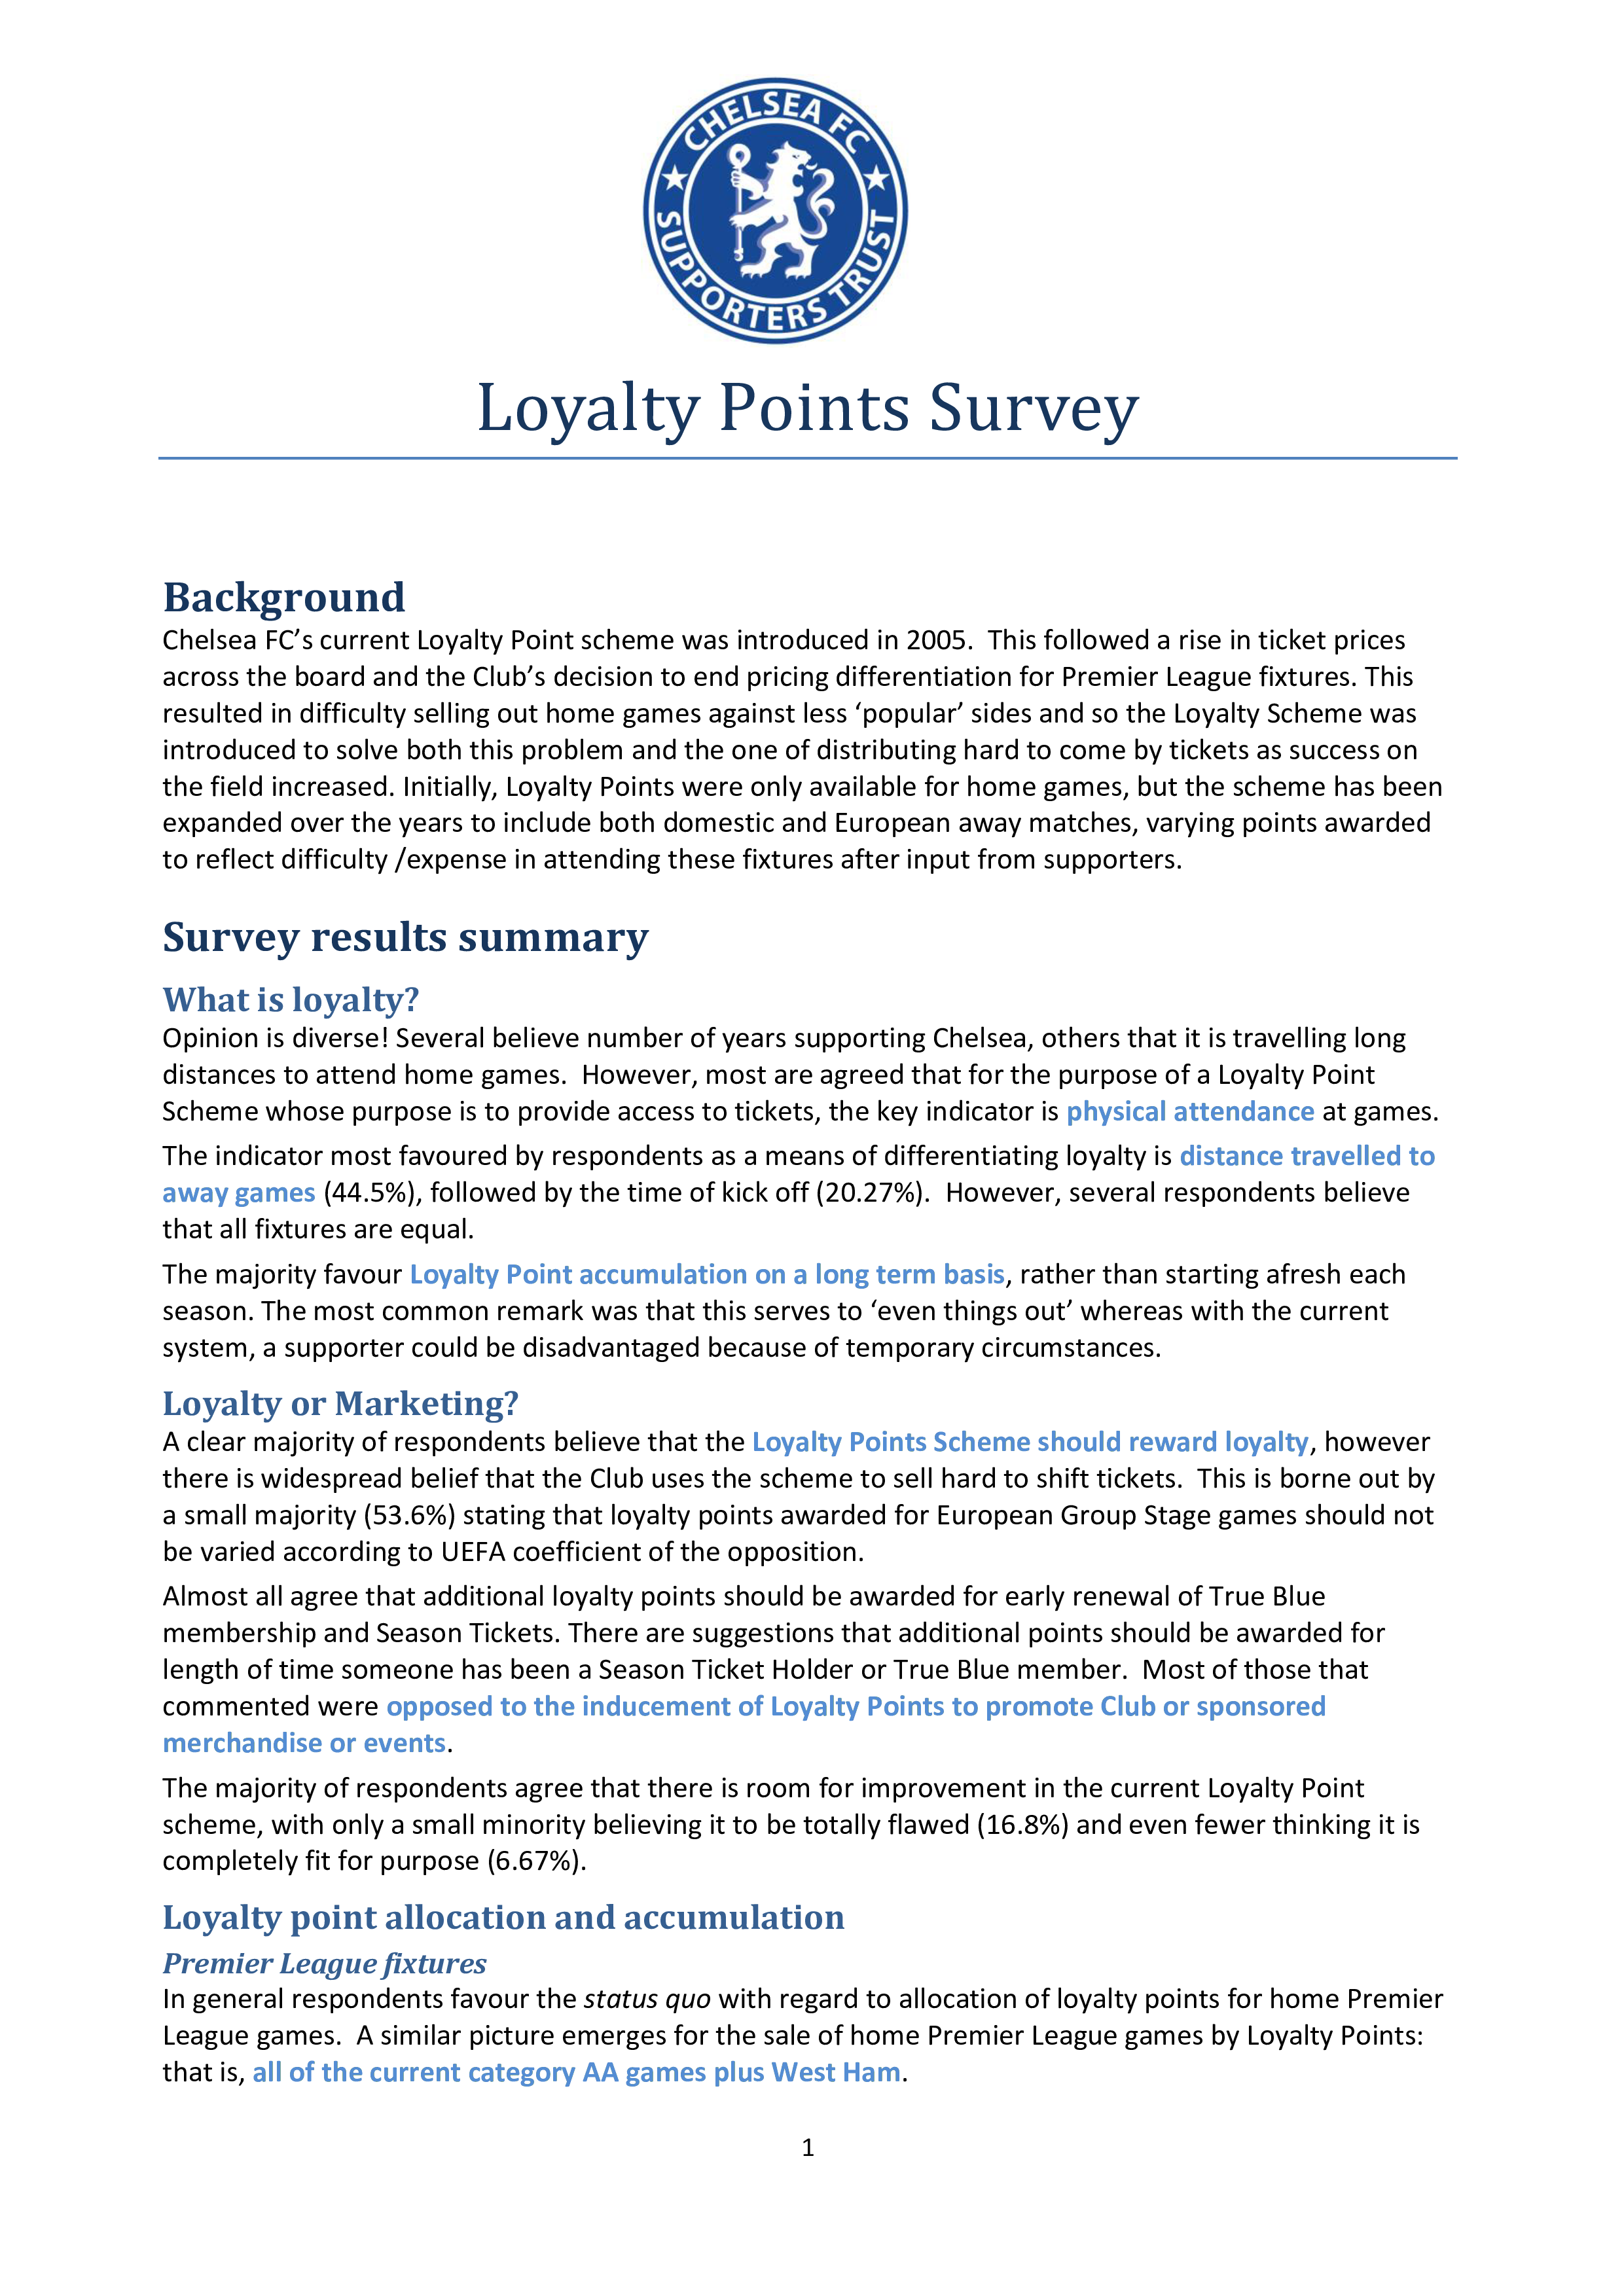 Loyalty Points Survey main image